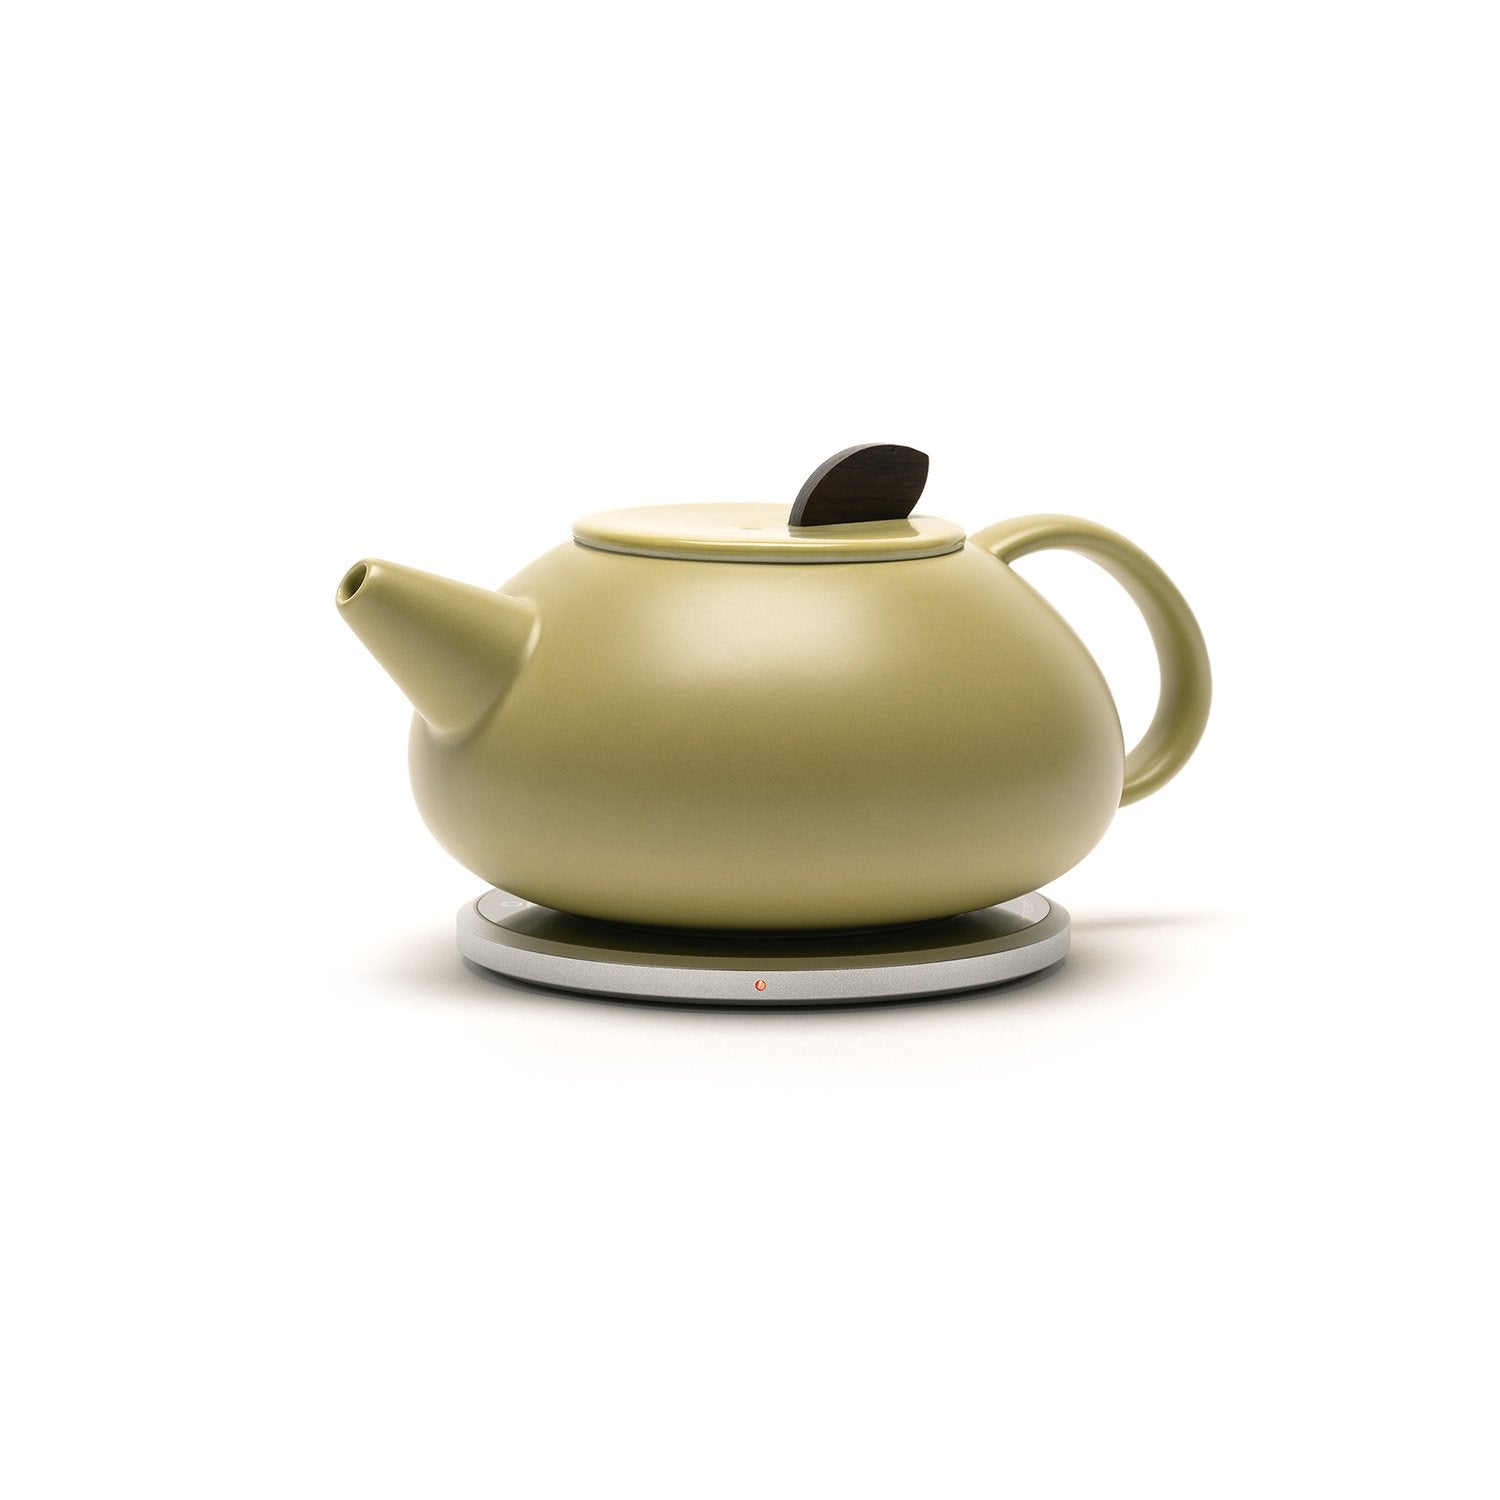 Olive teapot on heating pad side